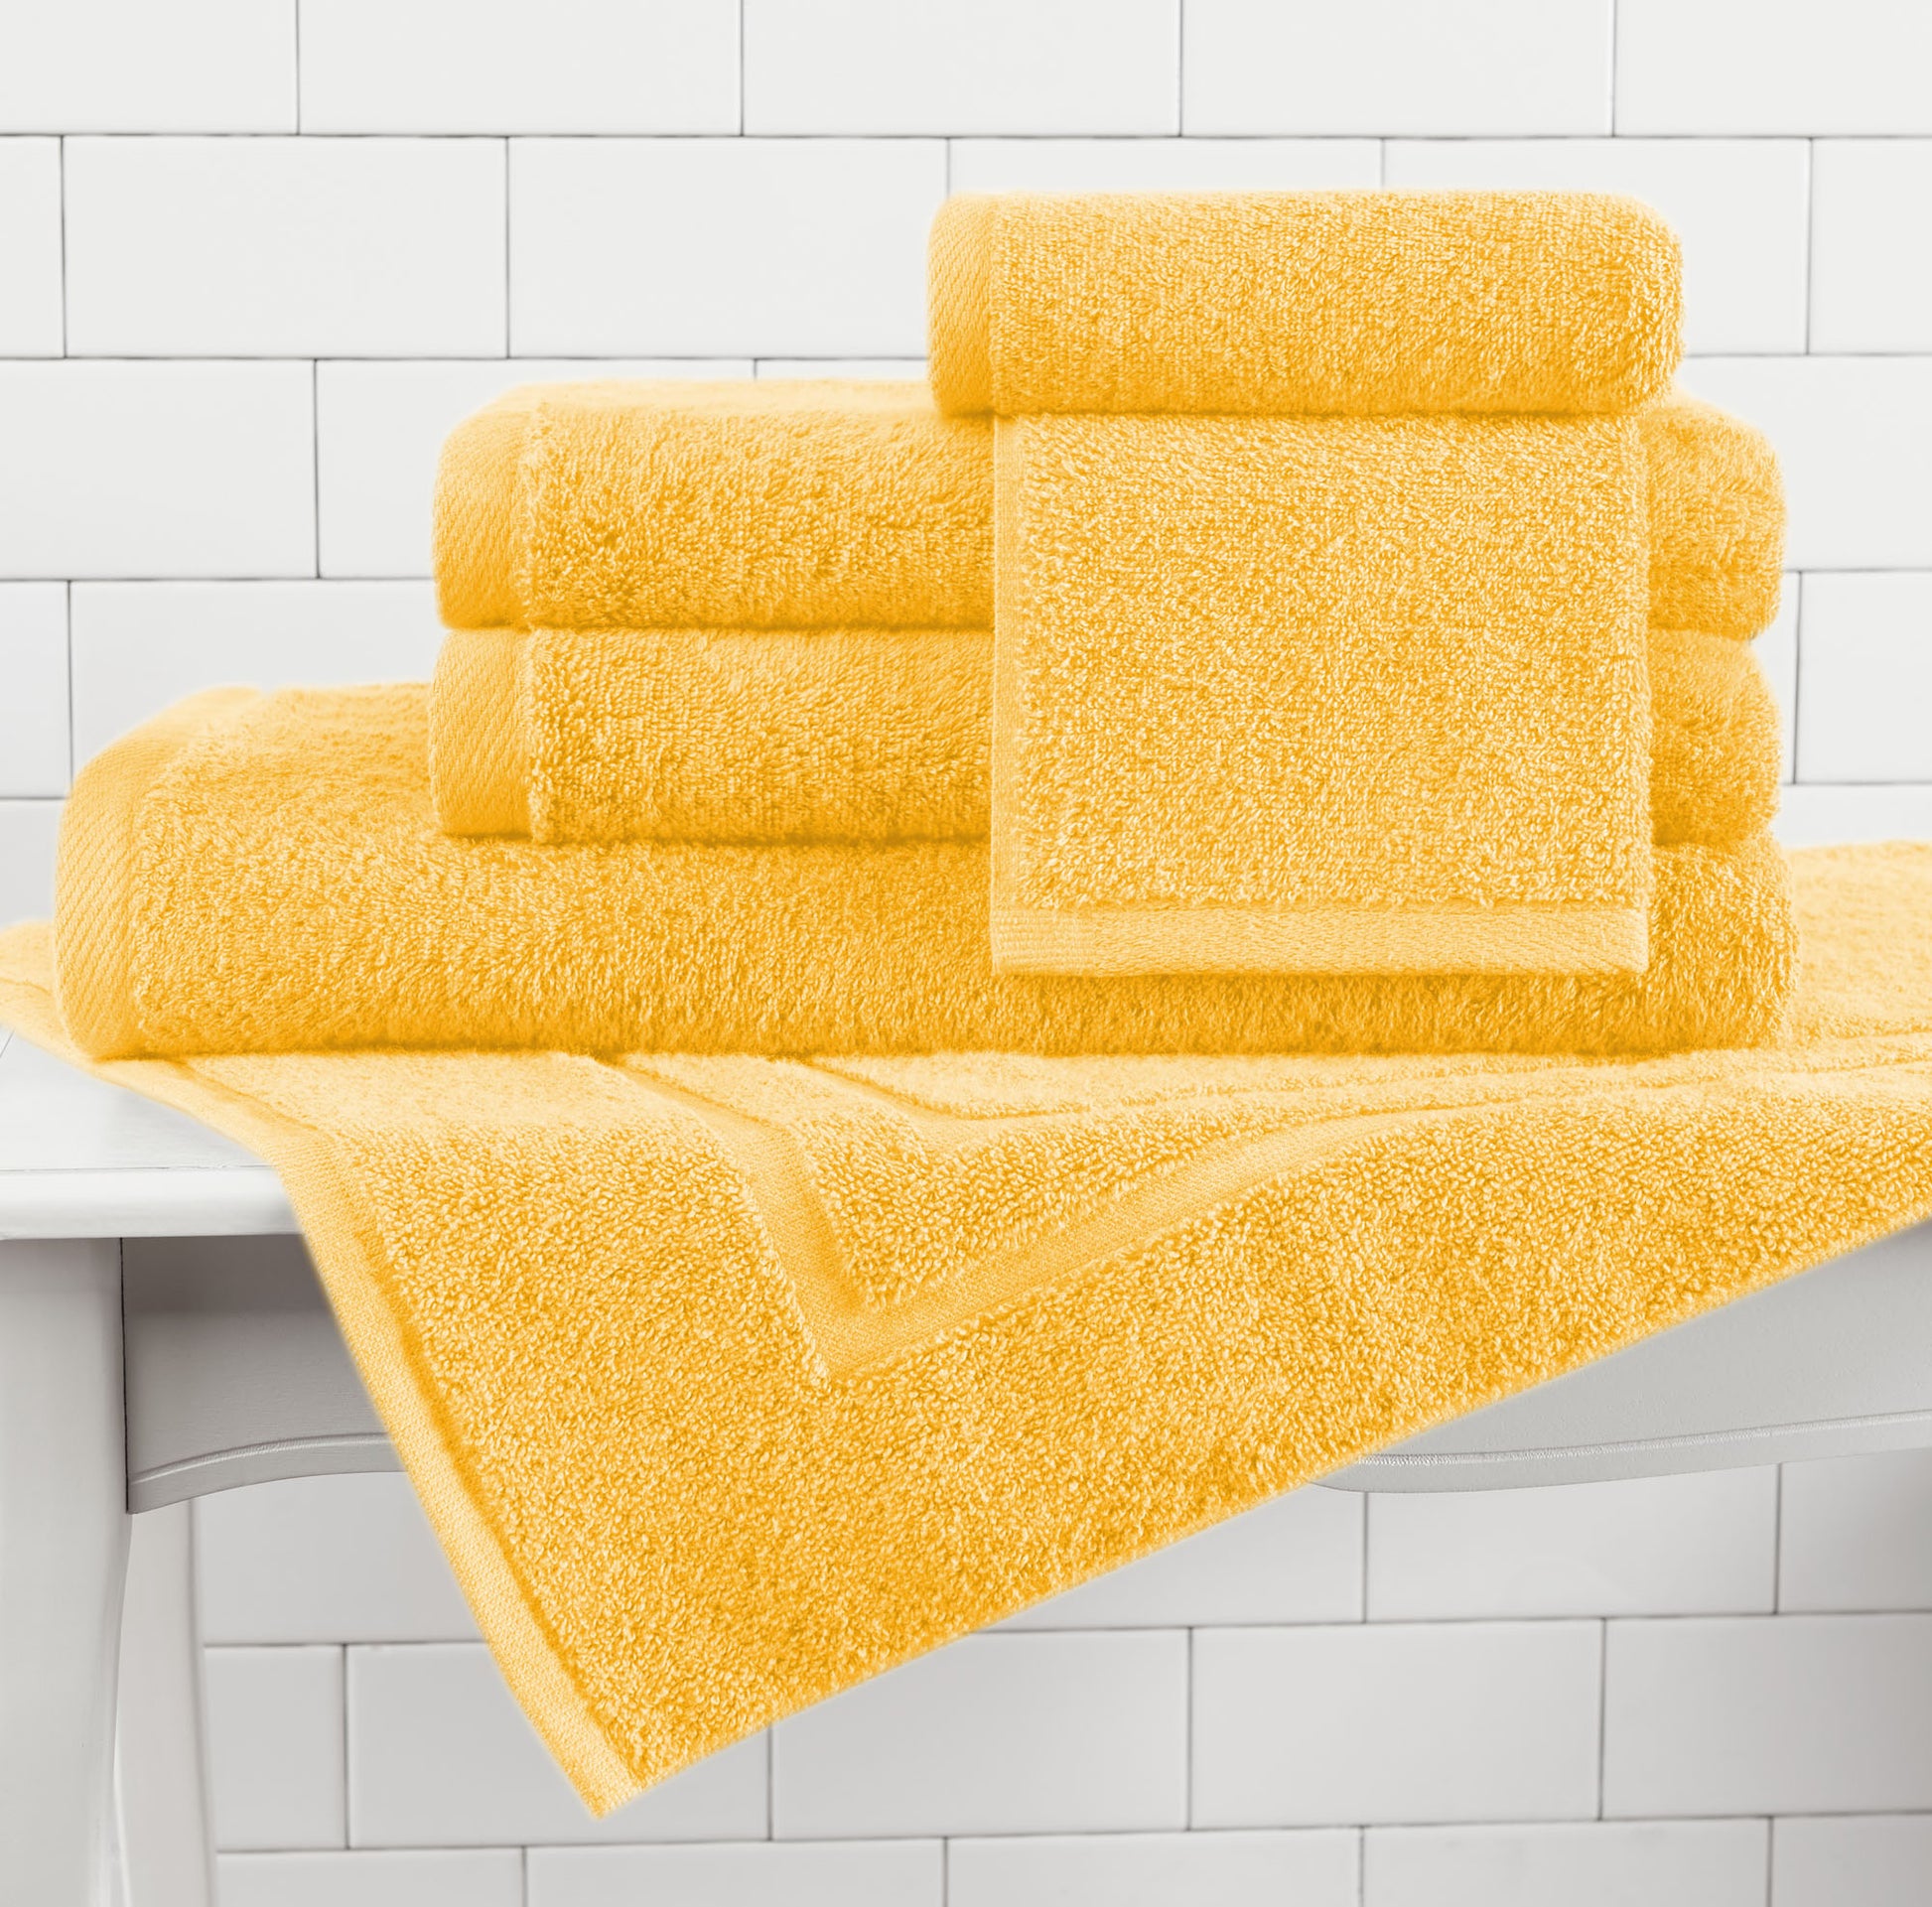 Brand – Pinzon 6 Piece Pima Cotton Bath Towel Set - Mineral Green